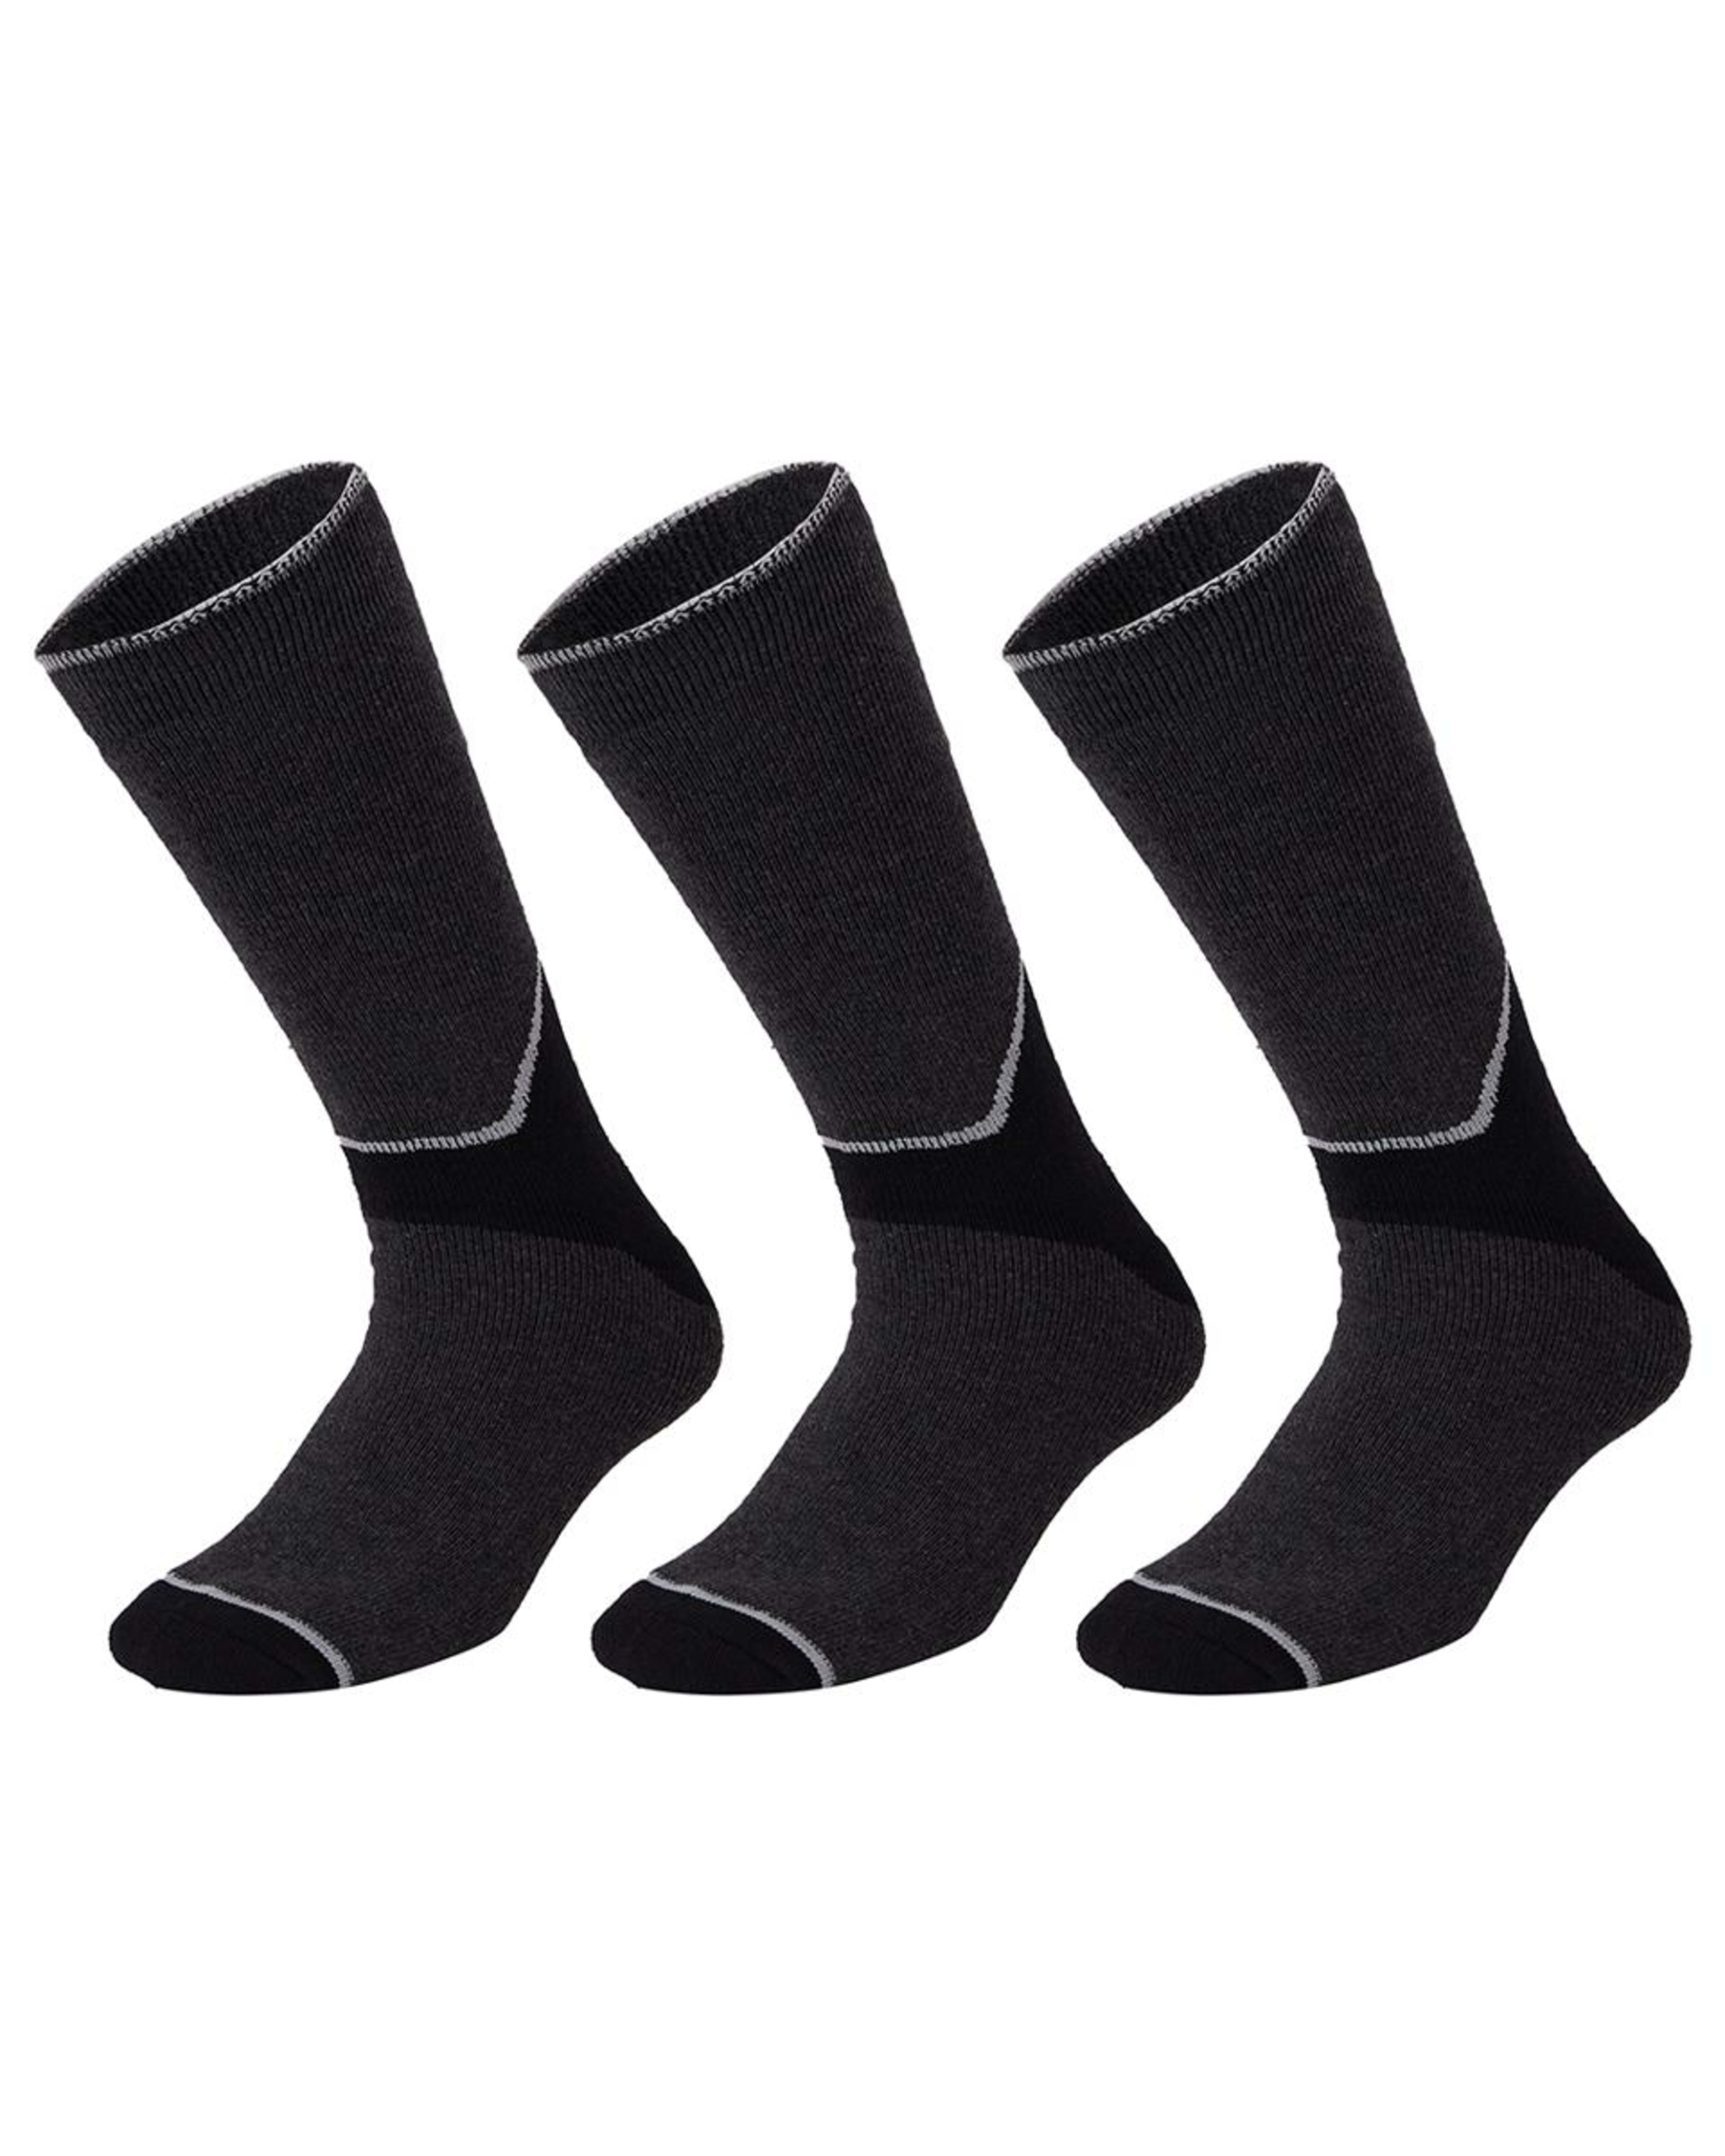 3 Pack Extreme Adventure Socks - Kmart